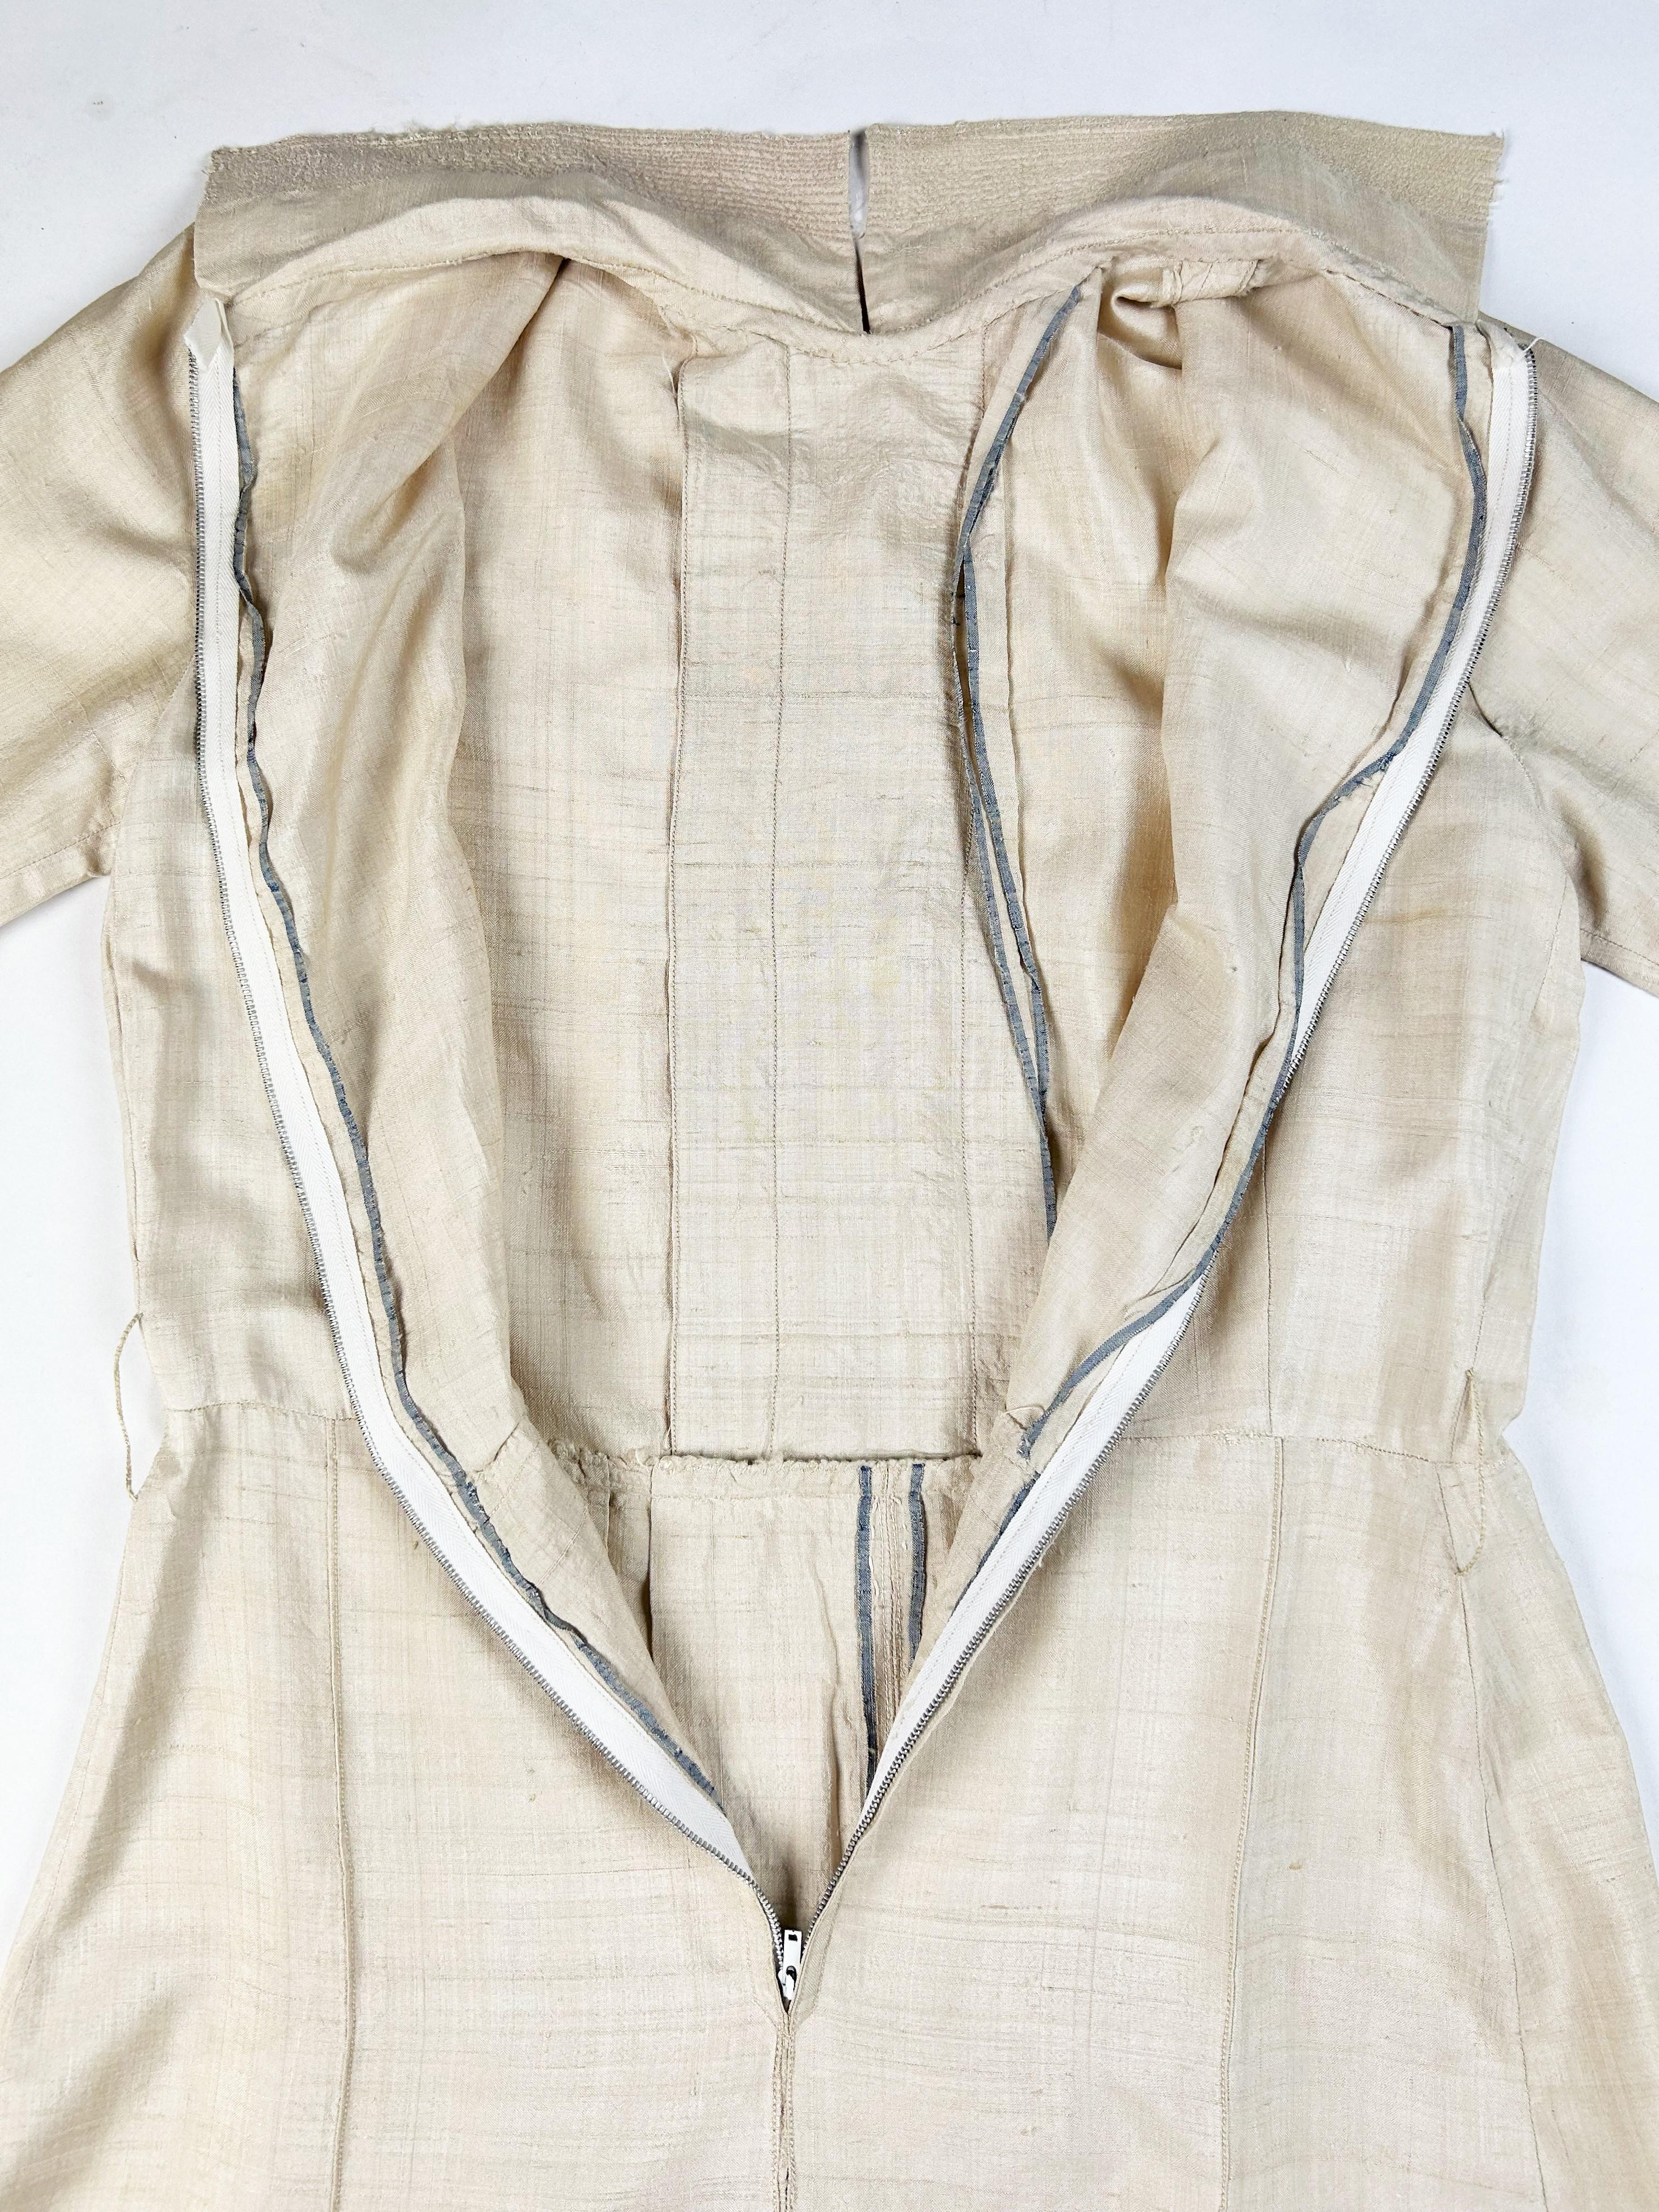 Unbleached wild silk summer dress - France Circa 1930-1940 For Sale 9